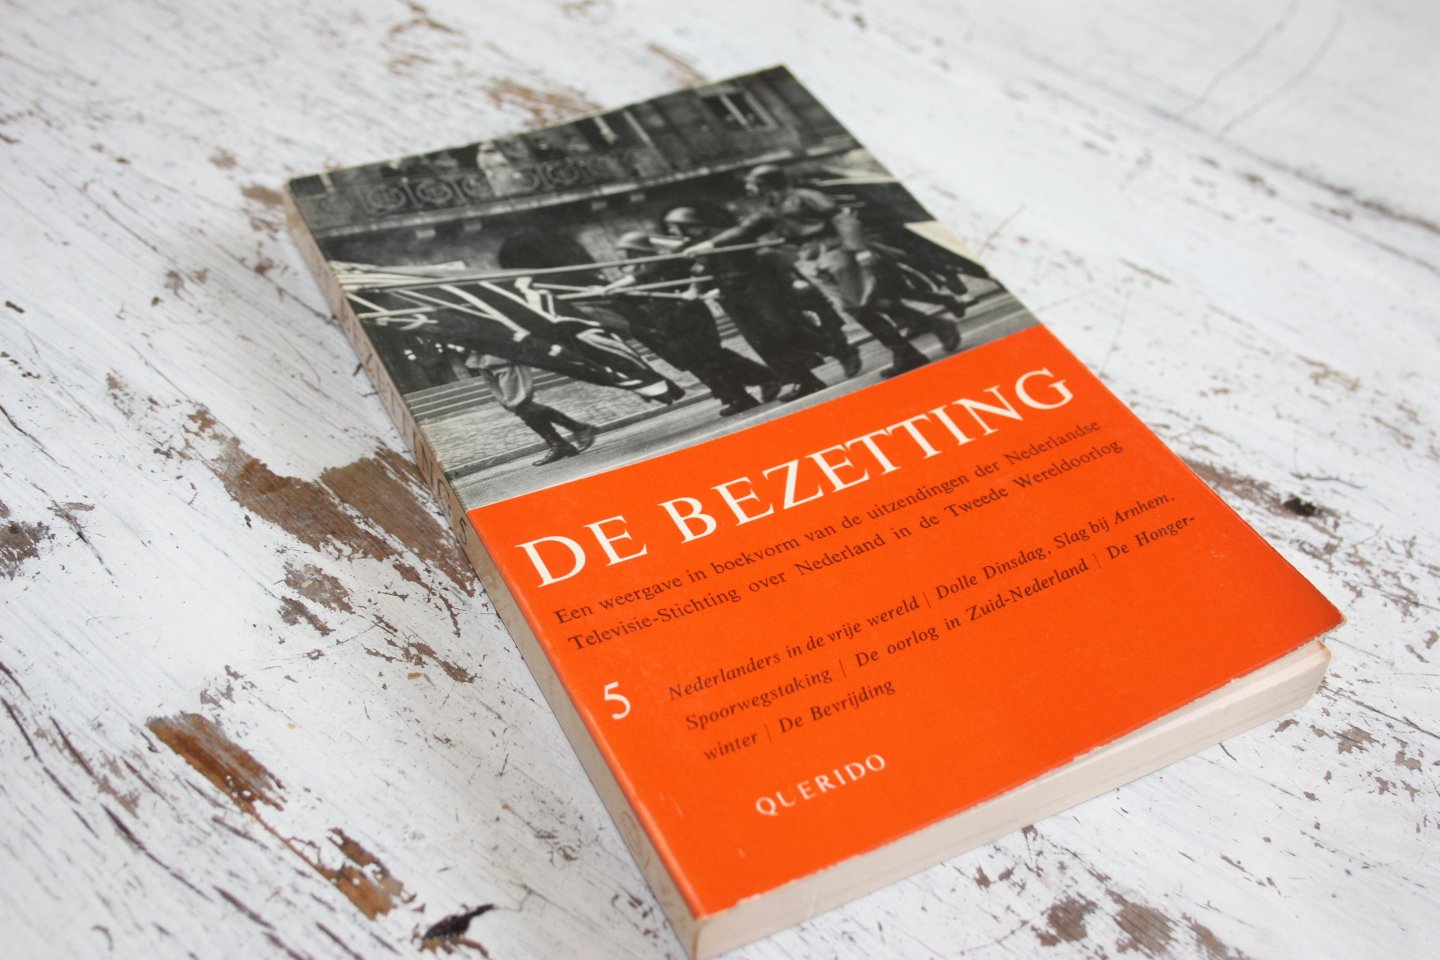 Jong, dr. L. de - BEZETTING , DE / 5 delen